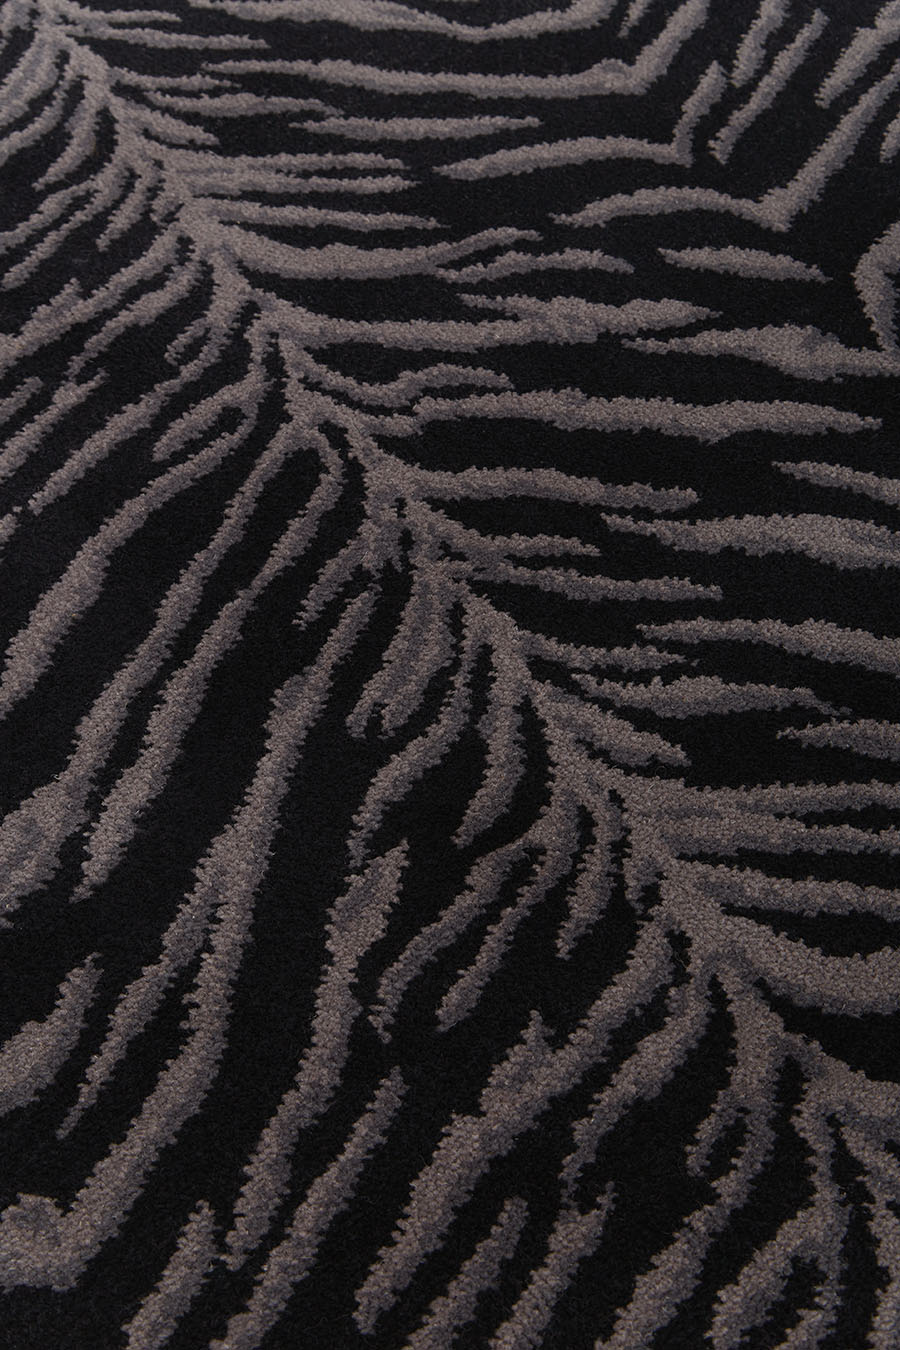 Detailed image of tiger print Tigre carpet in black